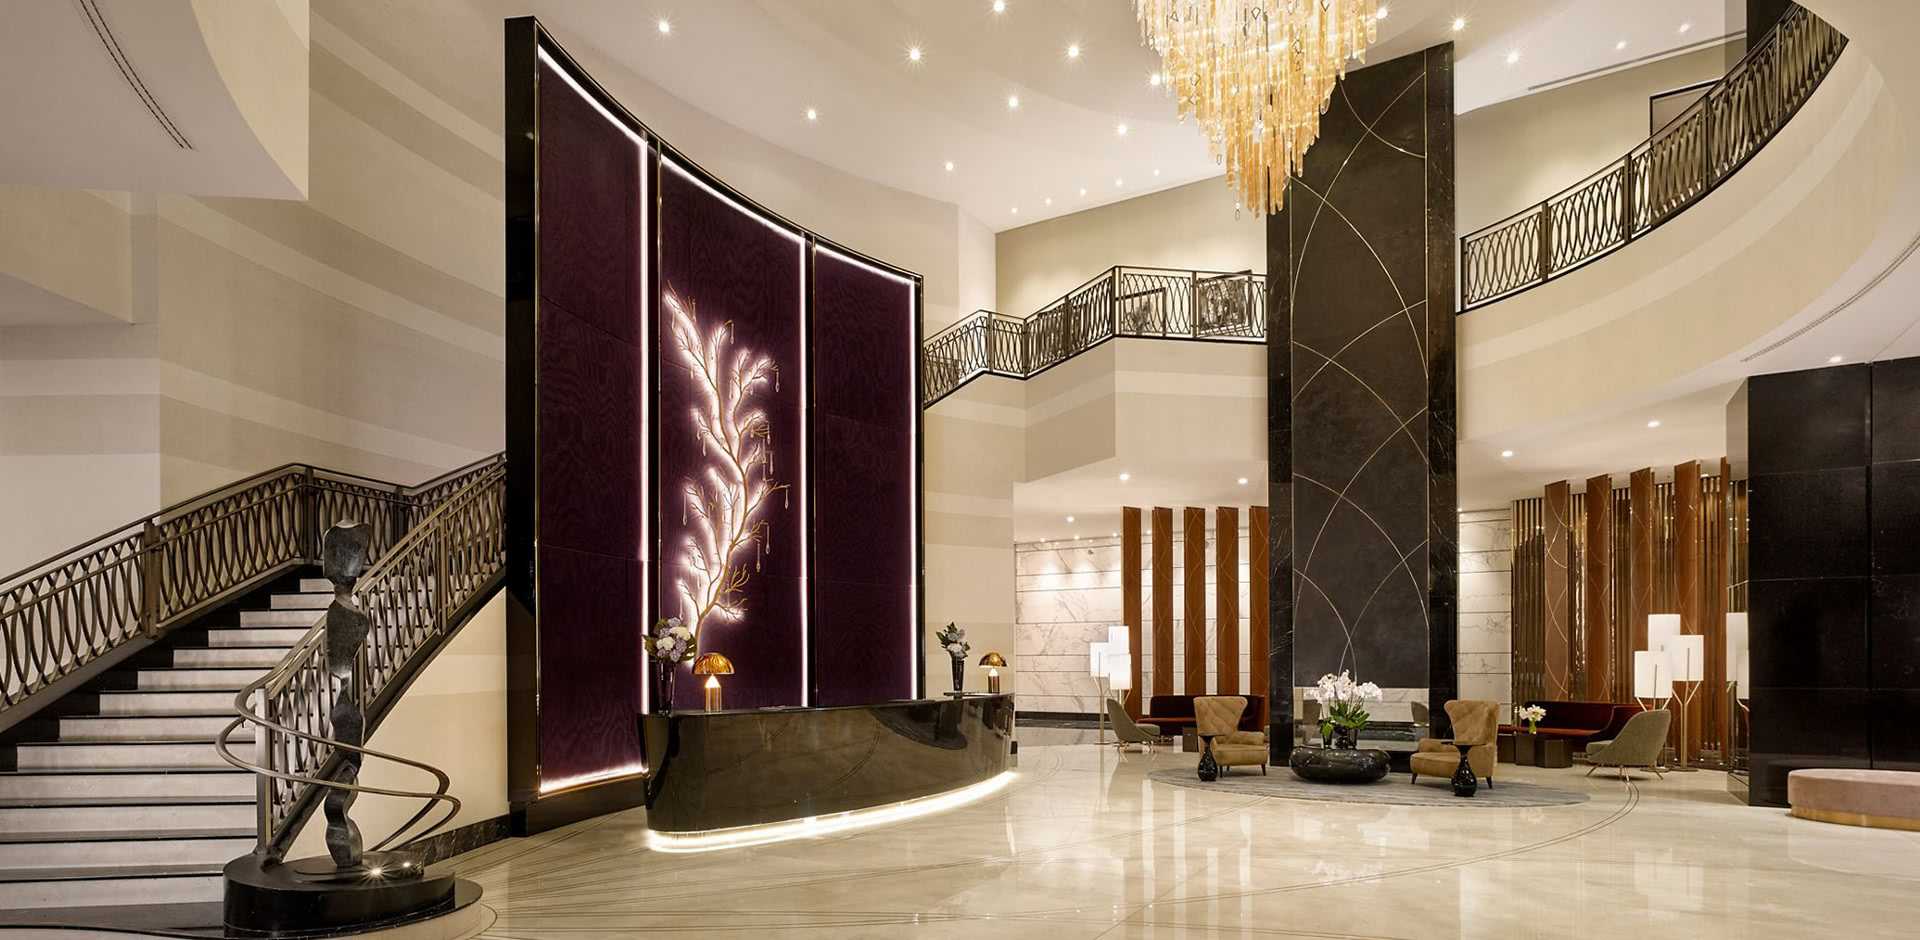 Ritz-Carlton Astana